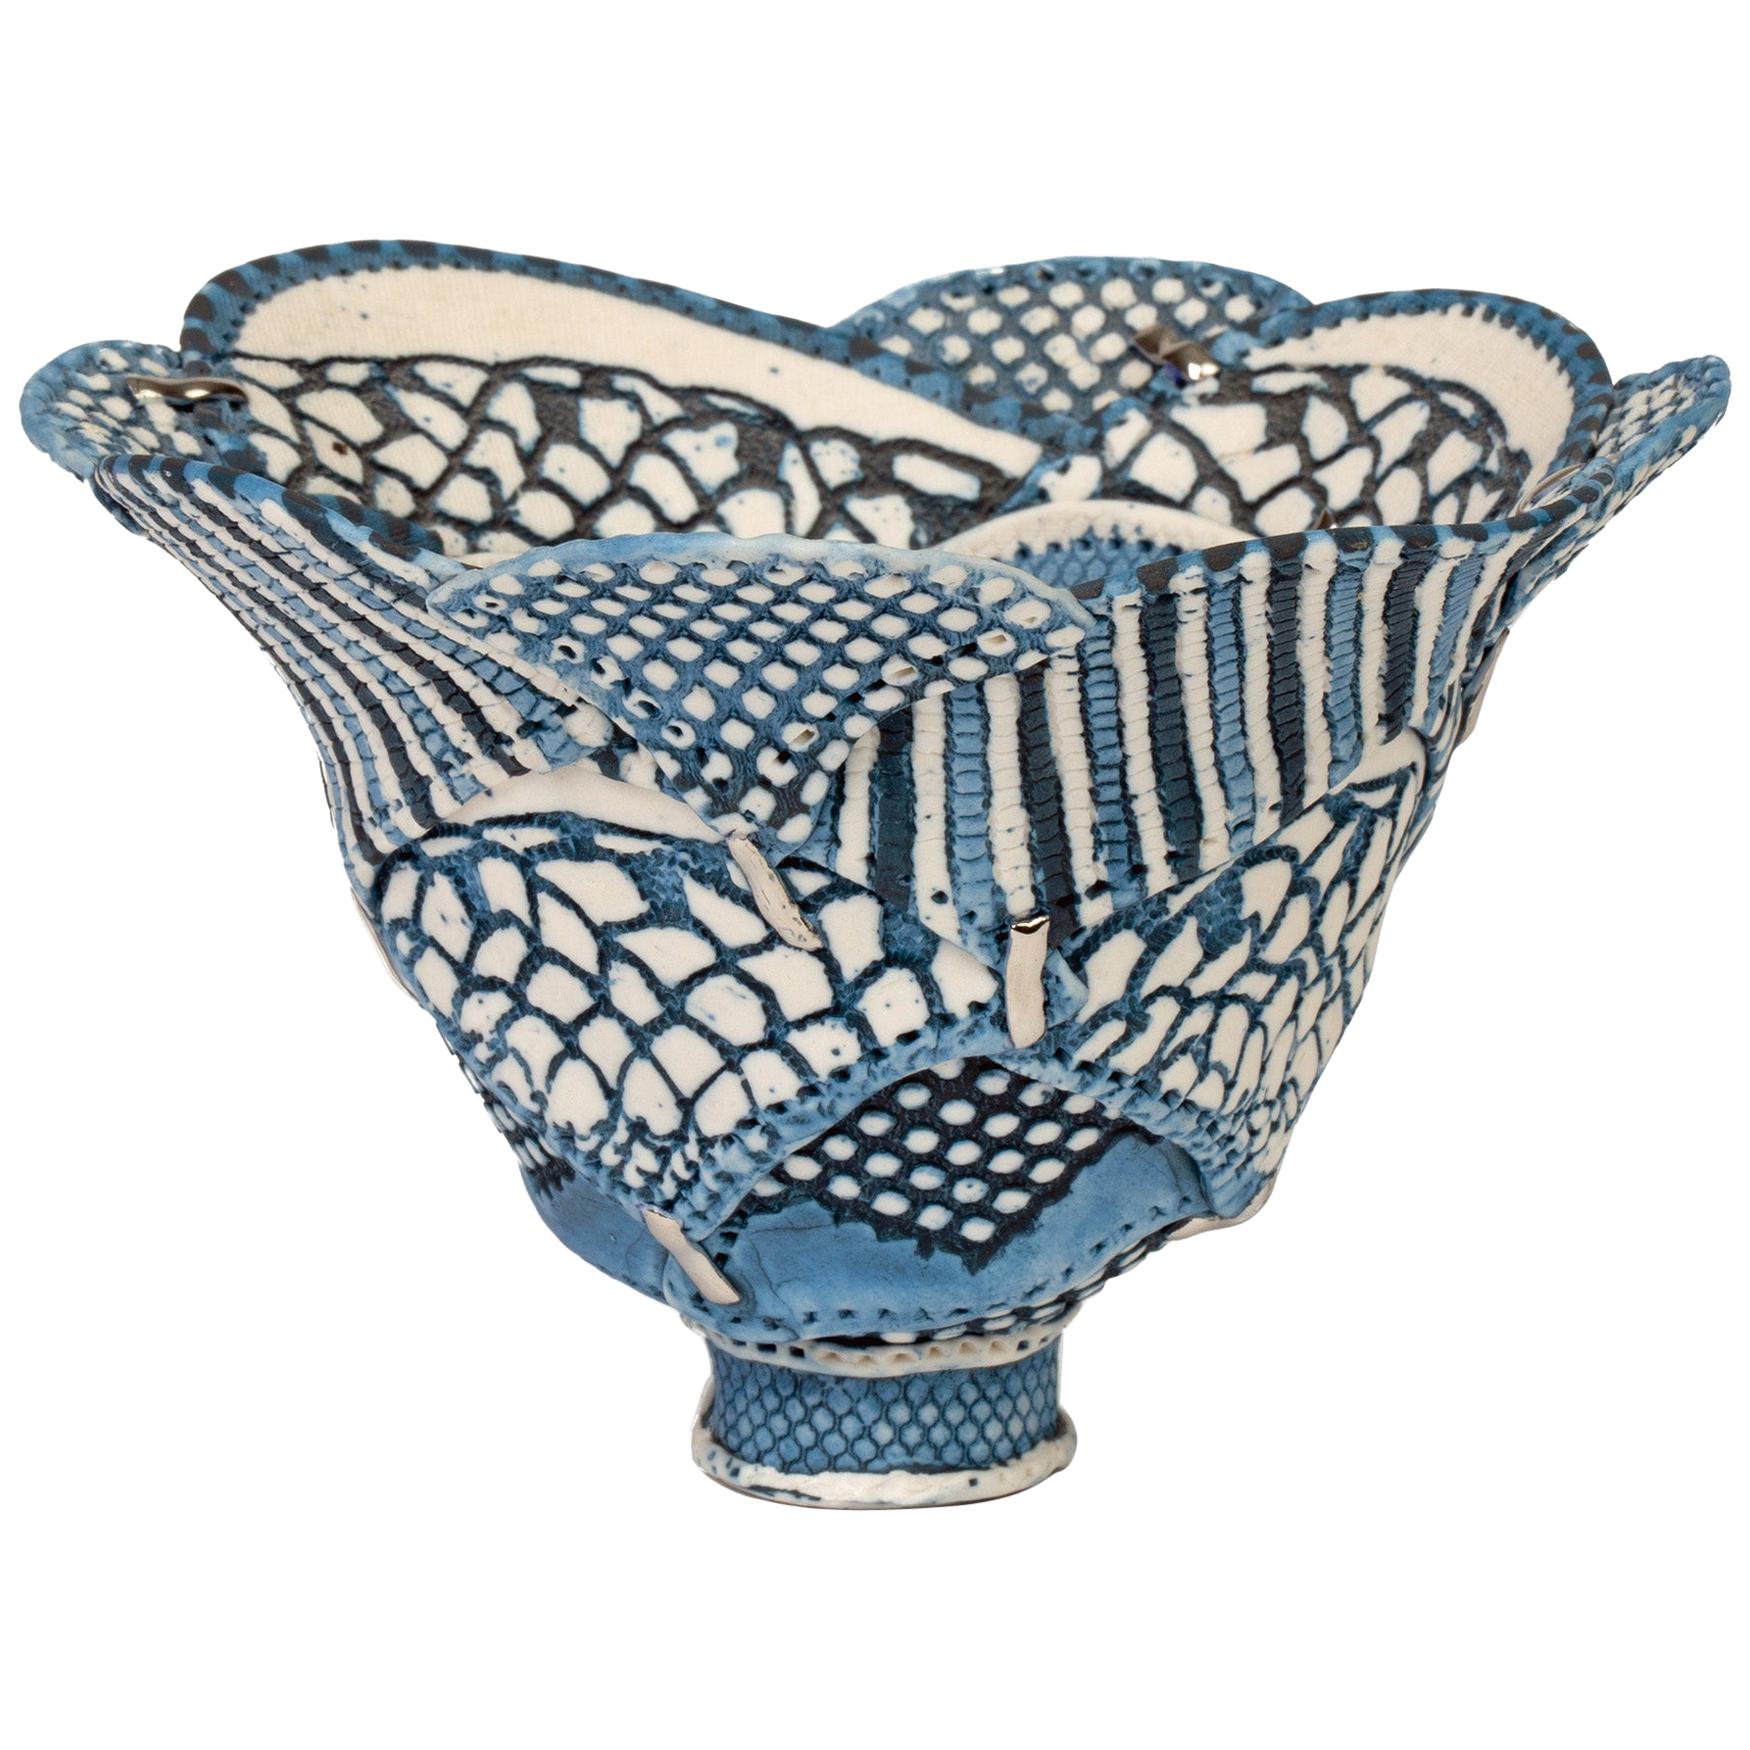 Linda Chew Studio Pottery Patterned Textile Porcelain Bowl